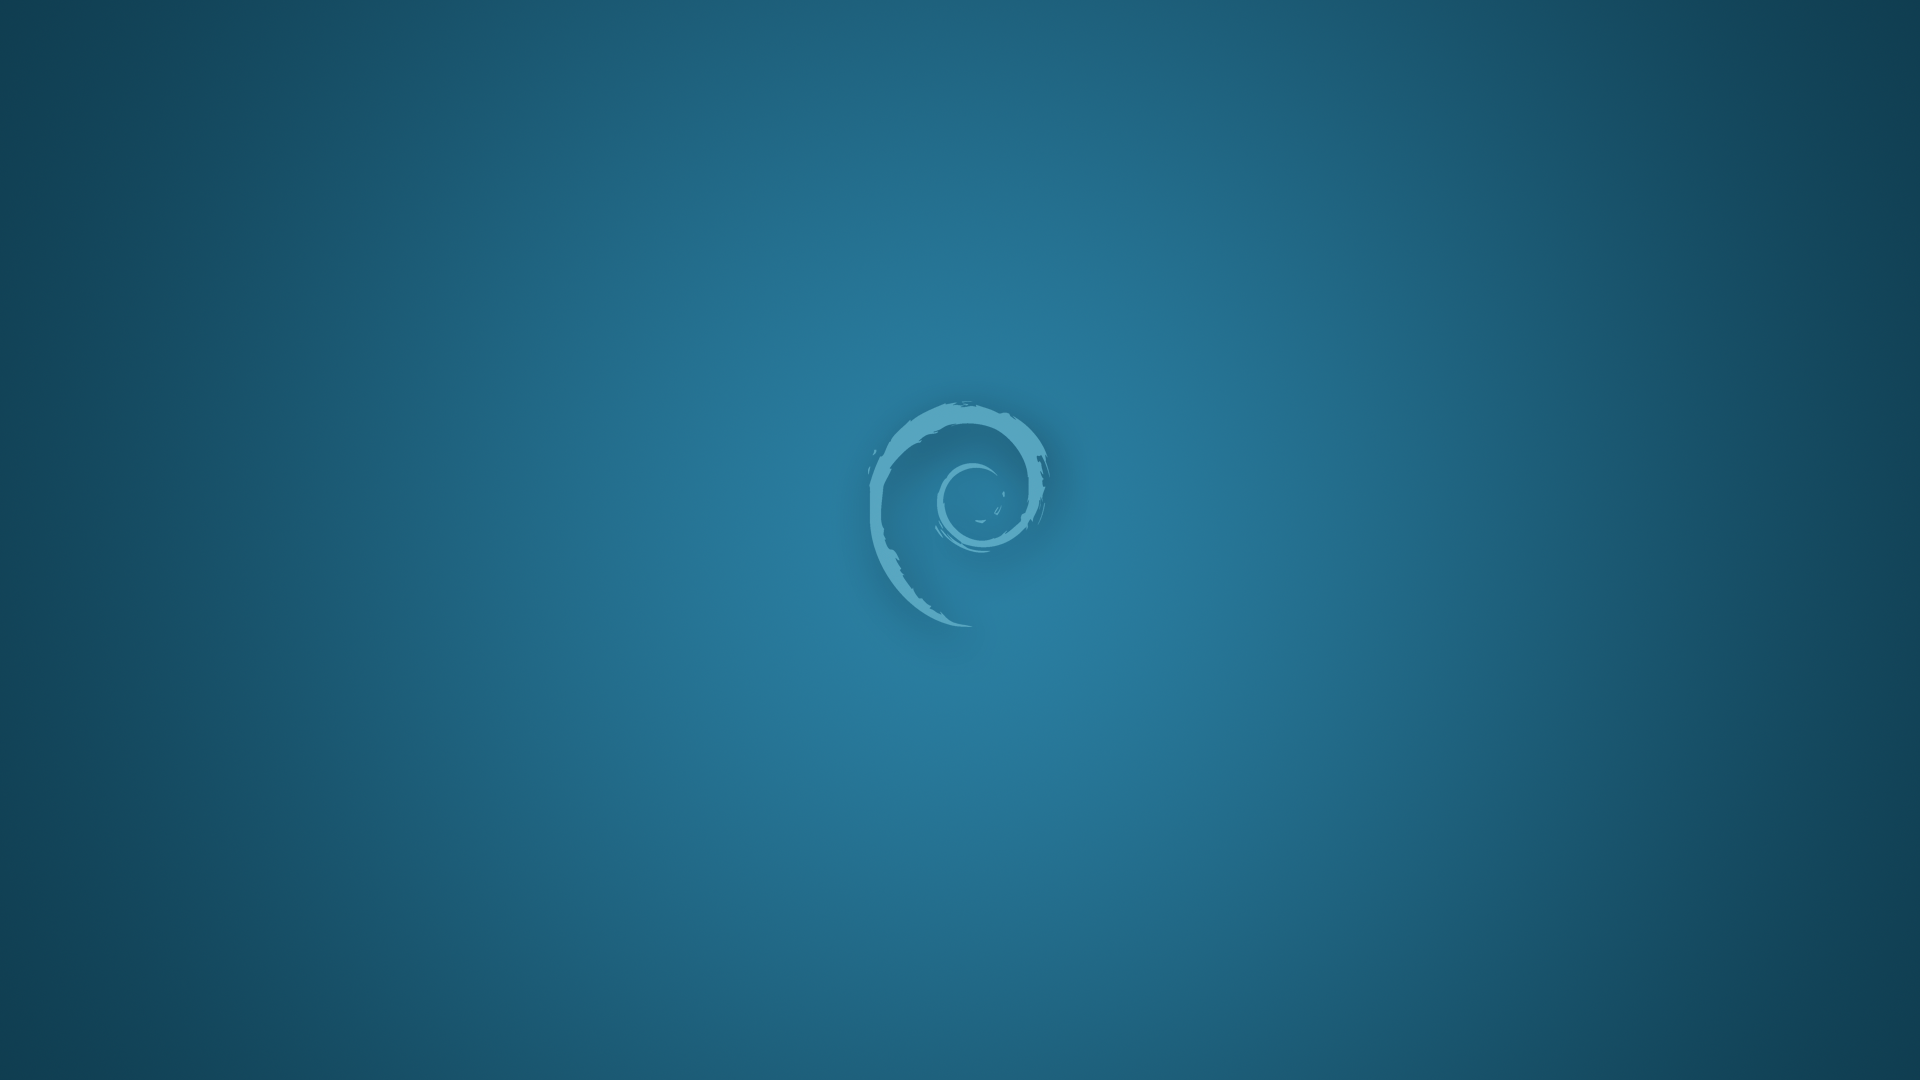 Debian Minimalism Simple Blue Linux Unix Operating System 1920x1080